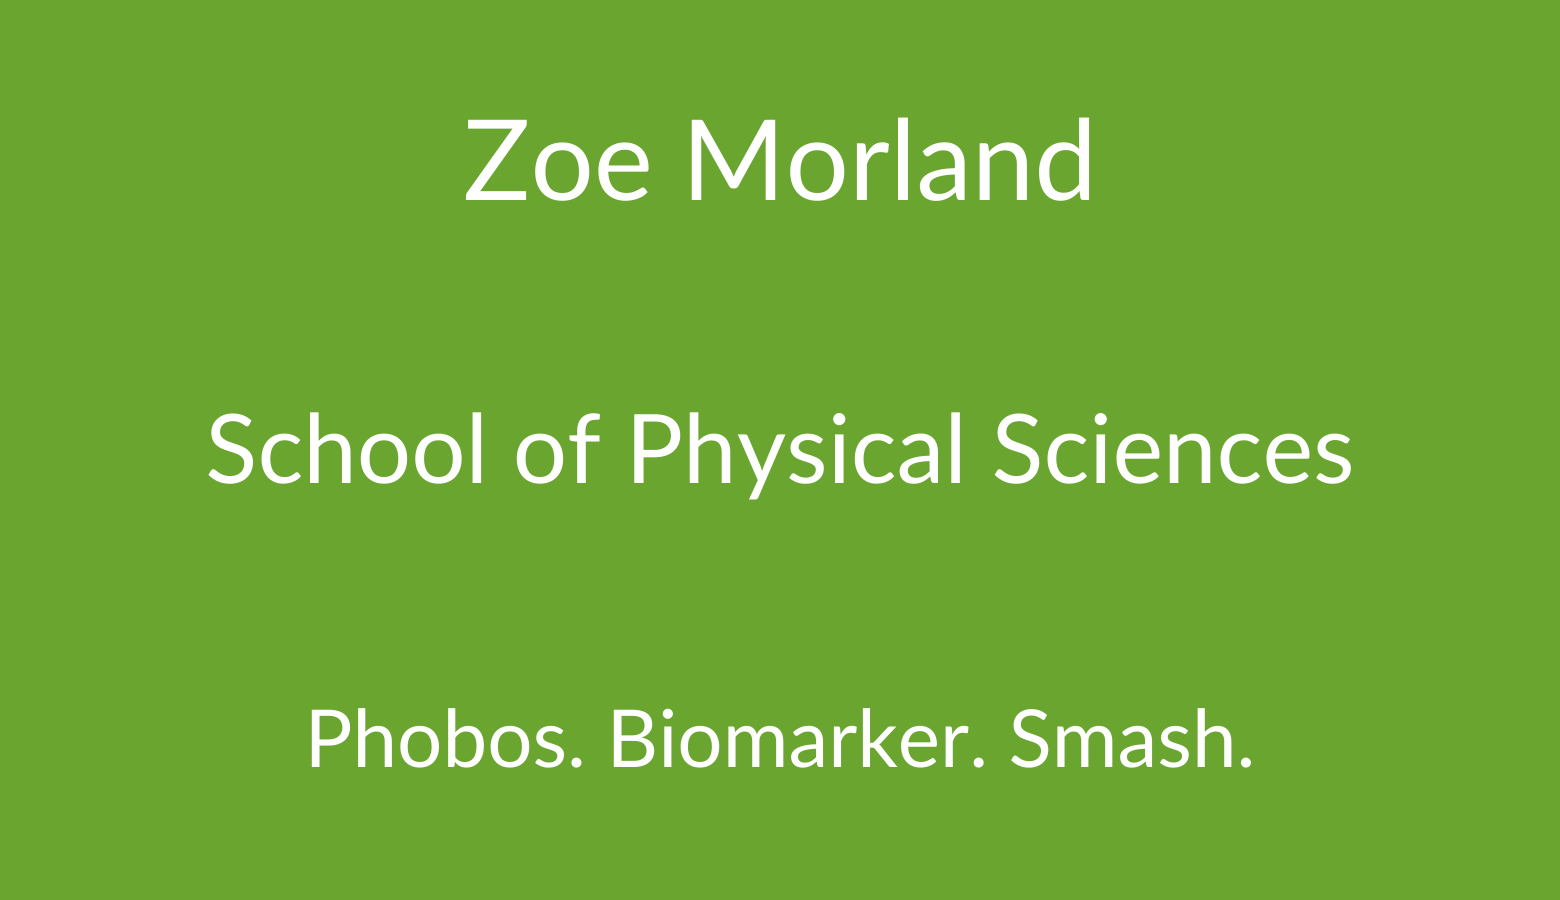 Zoe Morland. School of Physical Sciences. Phobos. Biomarker. Smash.